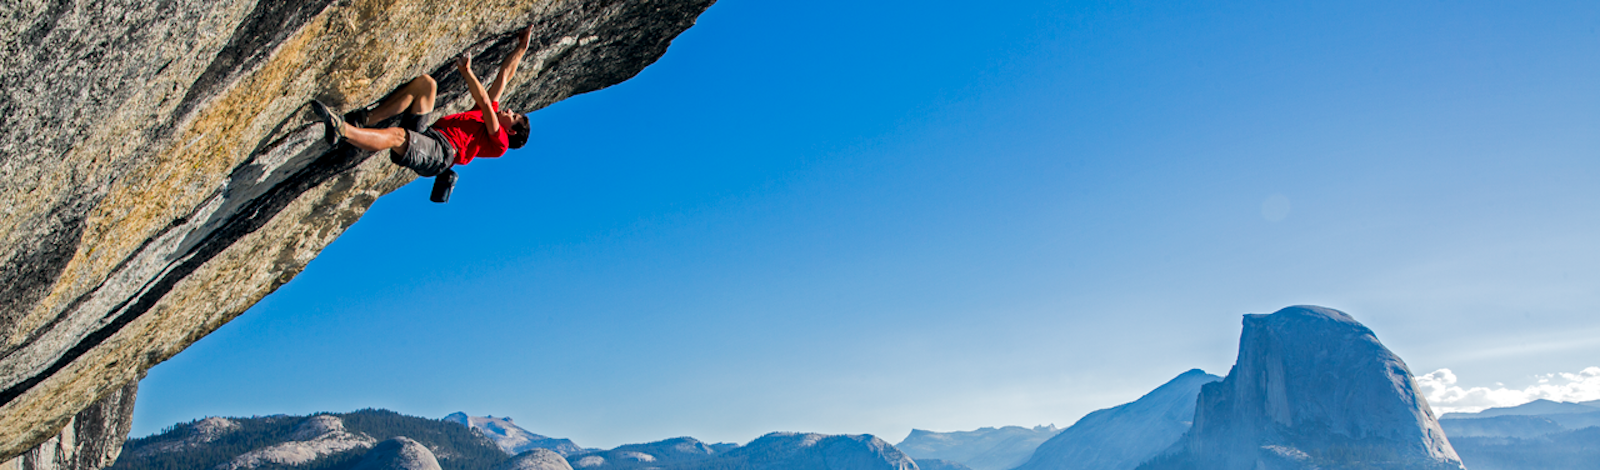 Free Solo Climber Alex Honnold Ascends Yosemite's El Capitan